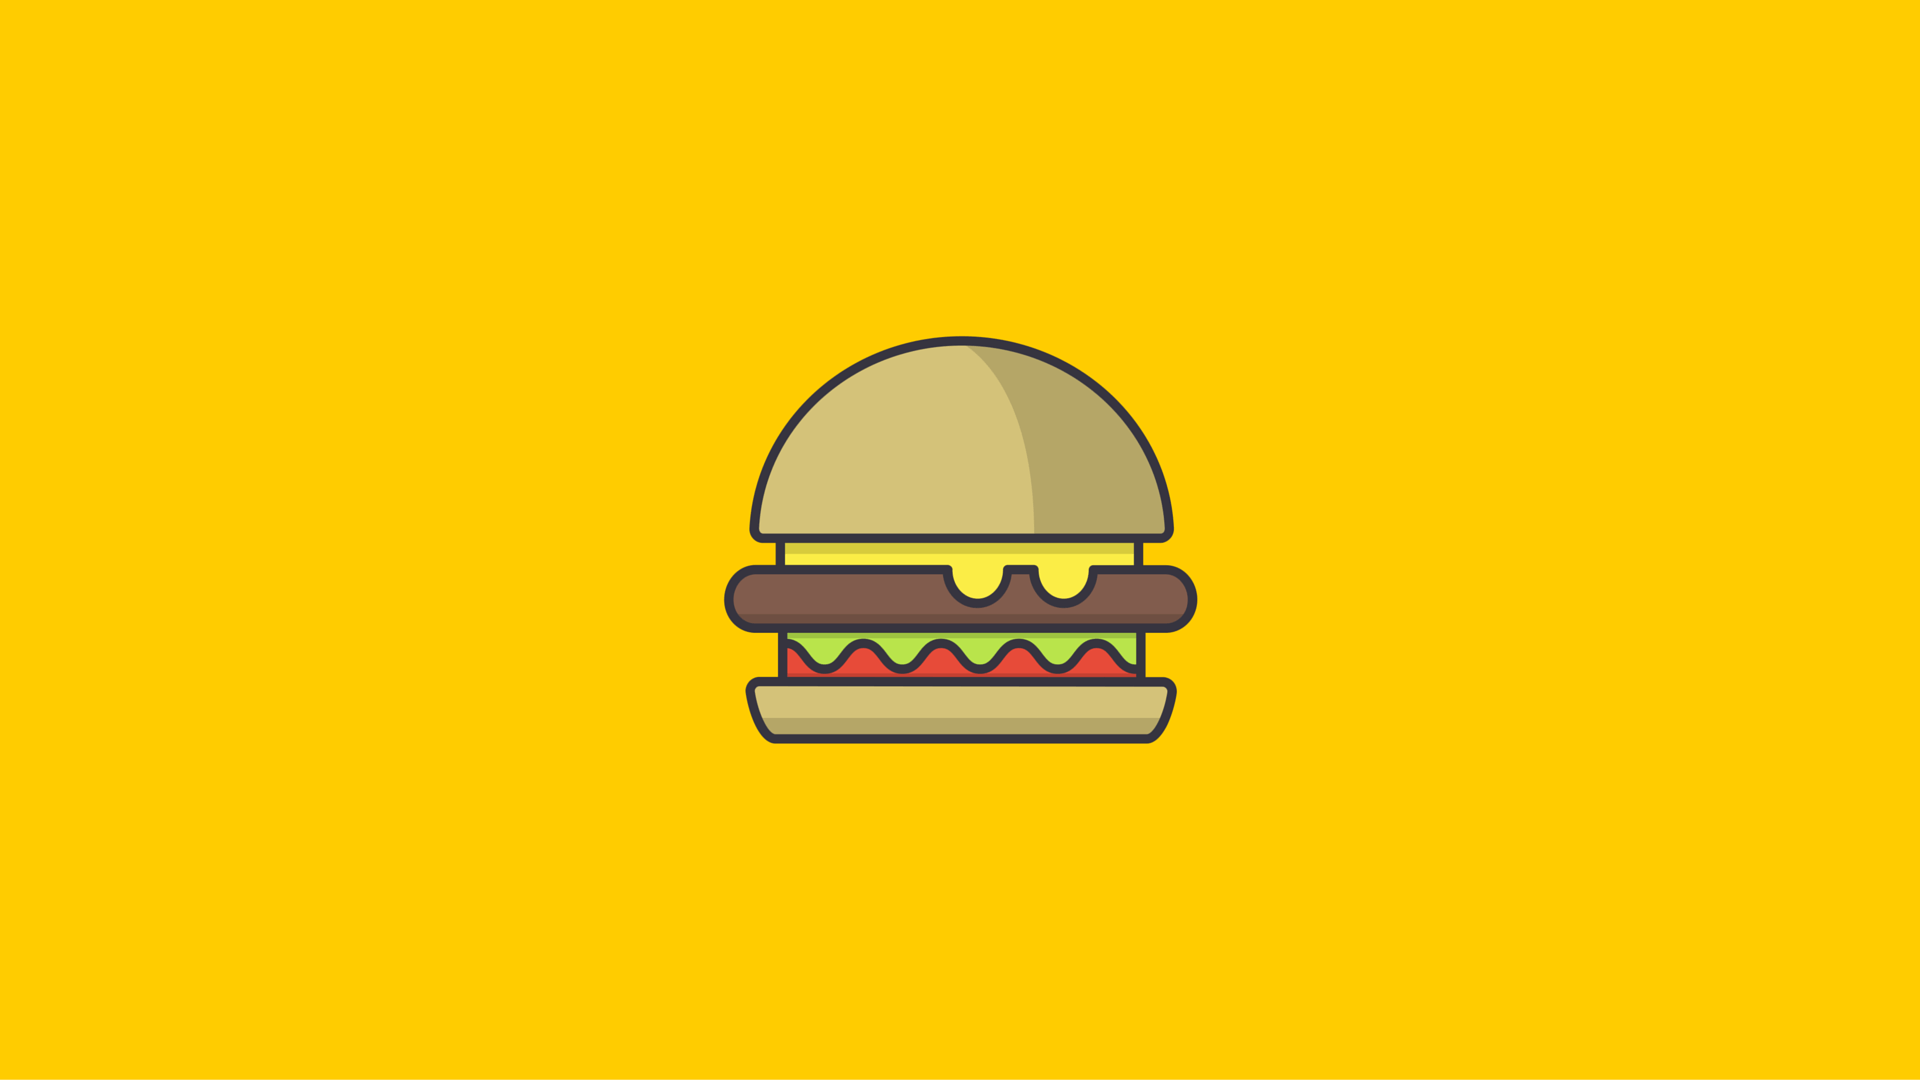 Burger Minimalism, HD Artist, 4k Wallpaper, Image, Background